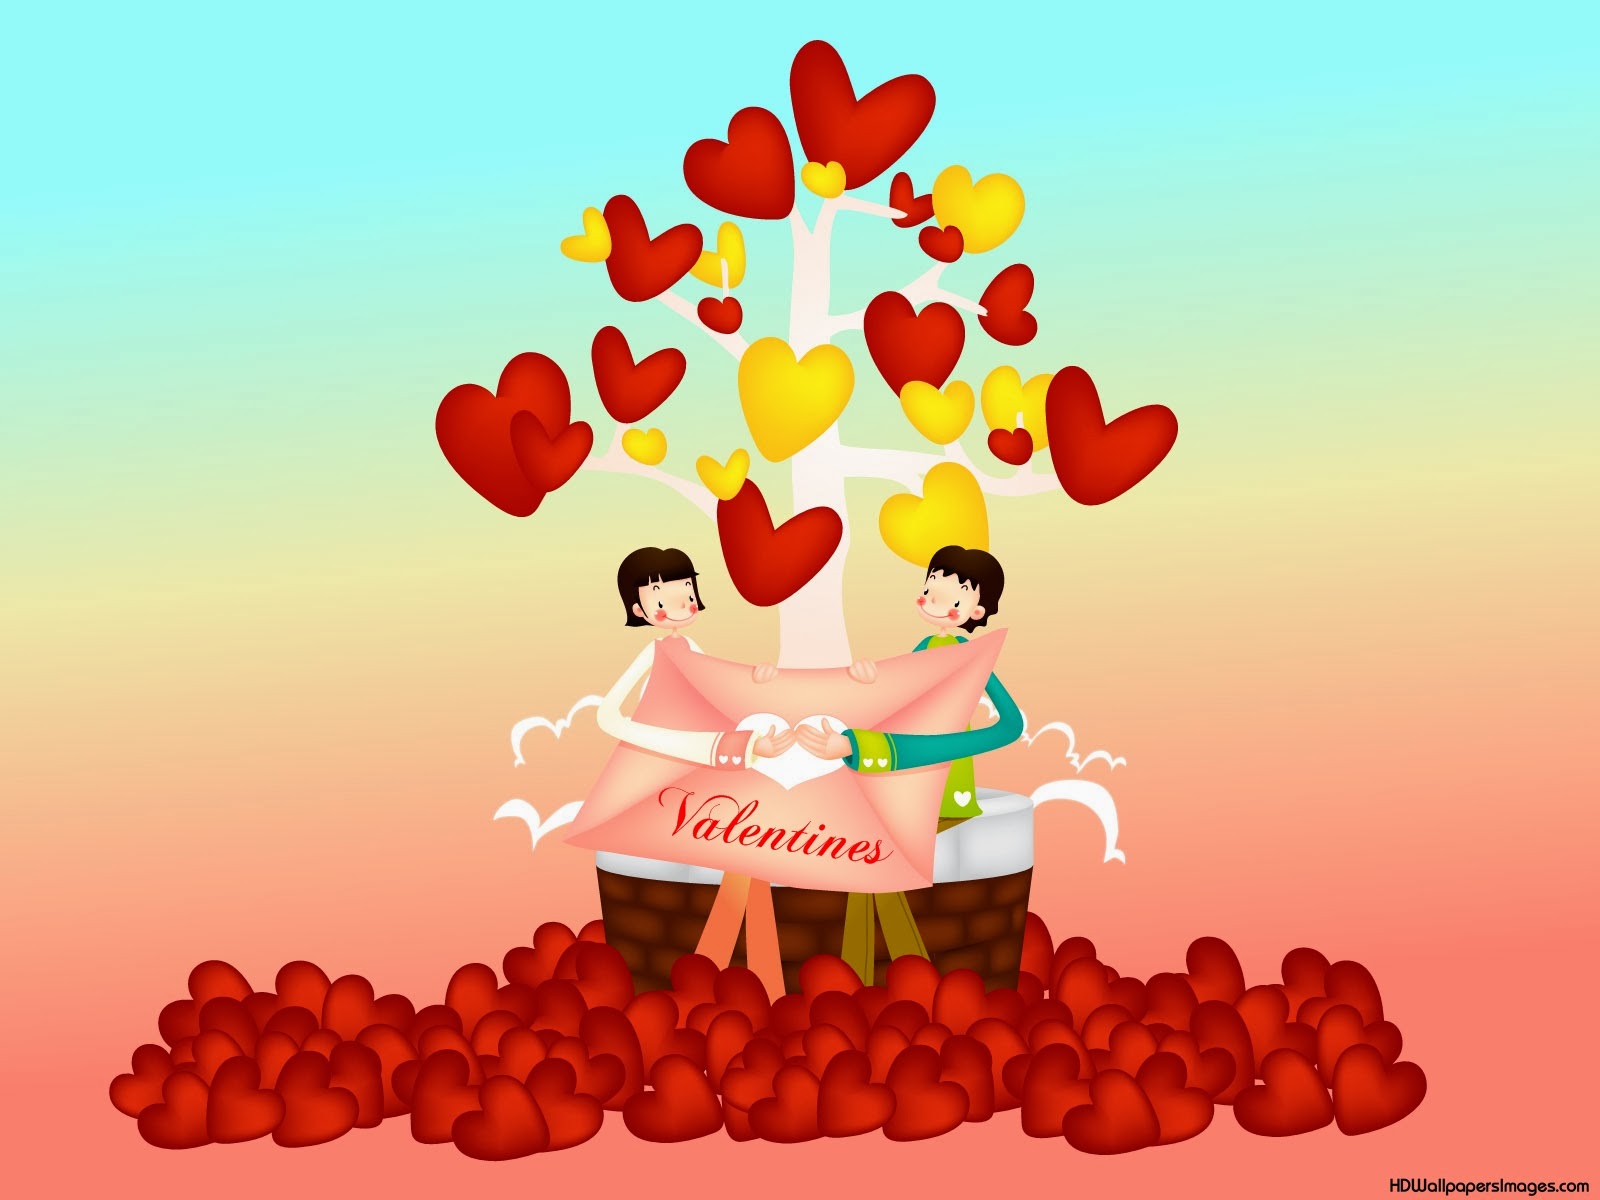 Gambar Animasi Dp Bbm Bergerak Romantis Terlengkap Display